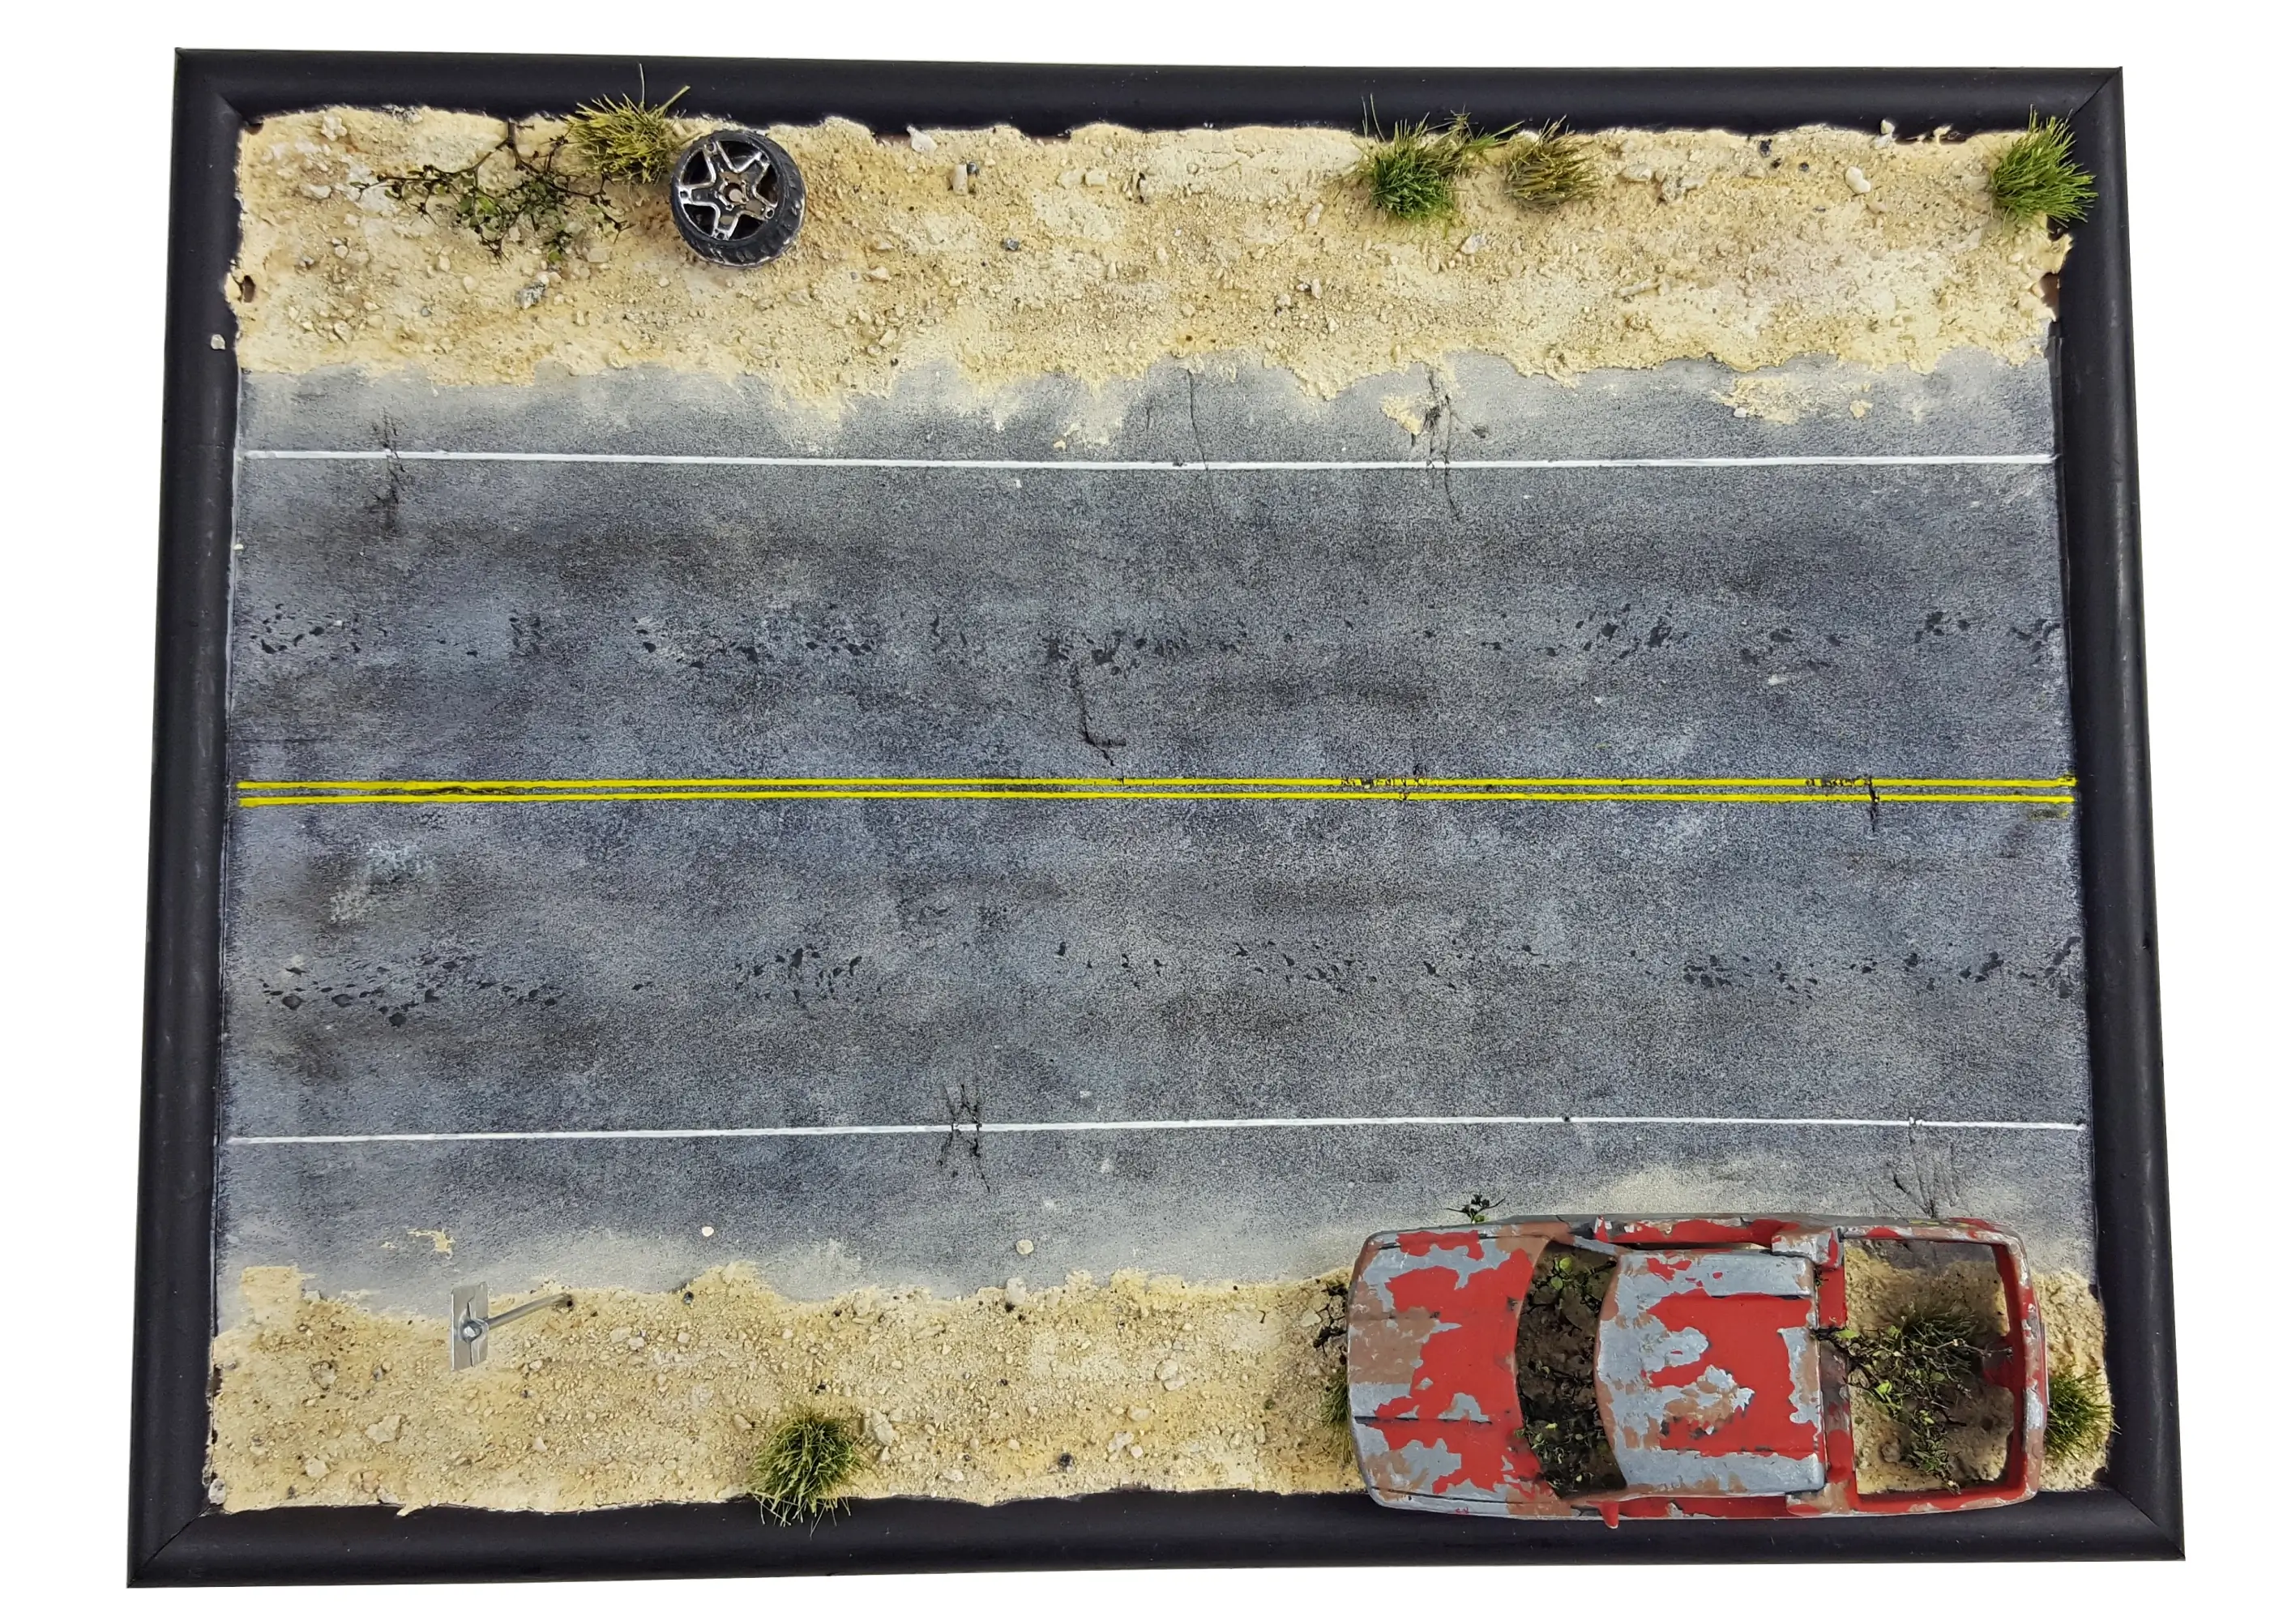 Asphalt road in desert from the air - miniature diorama